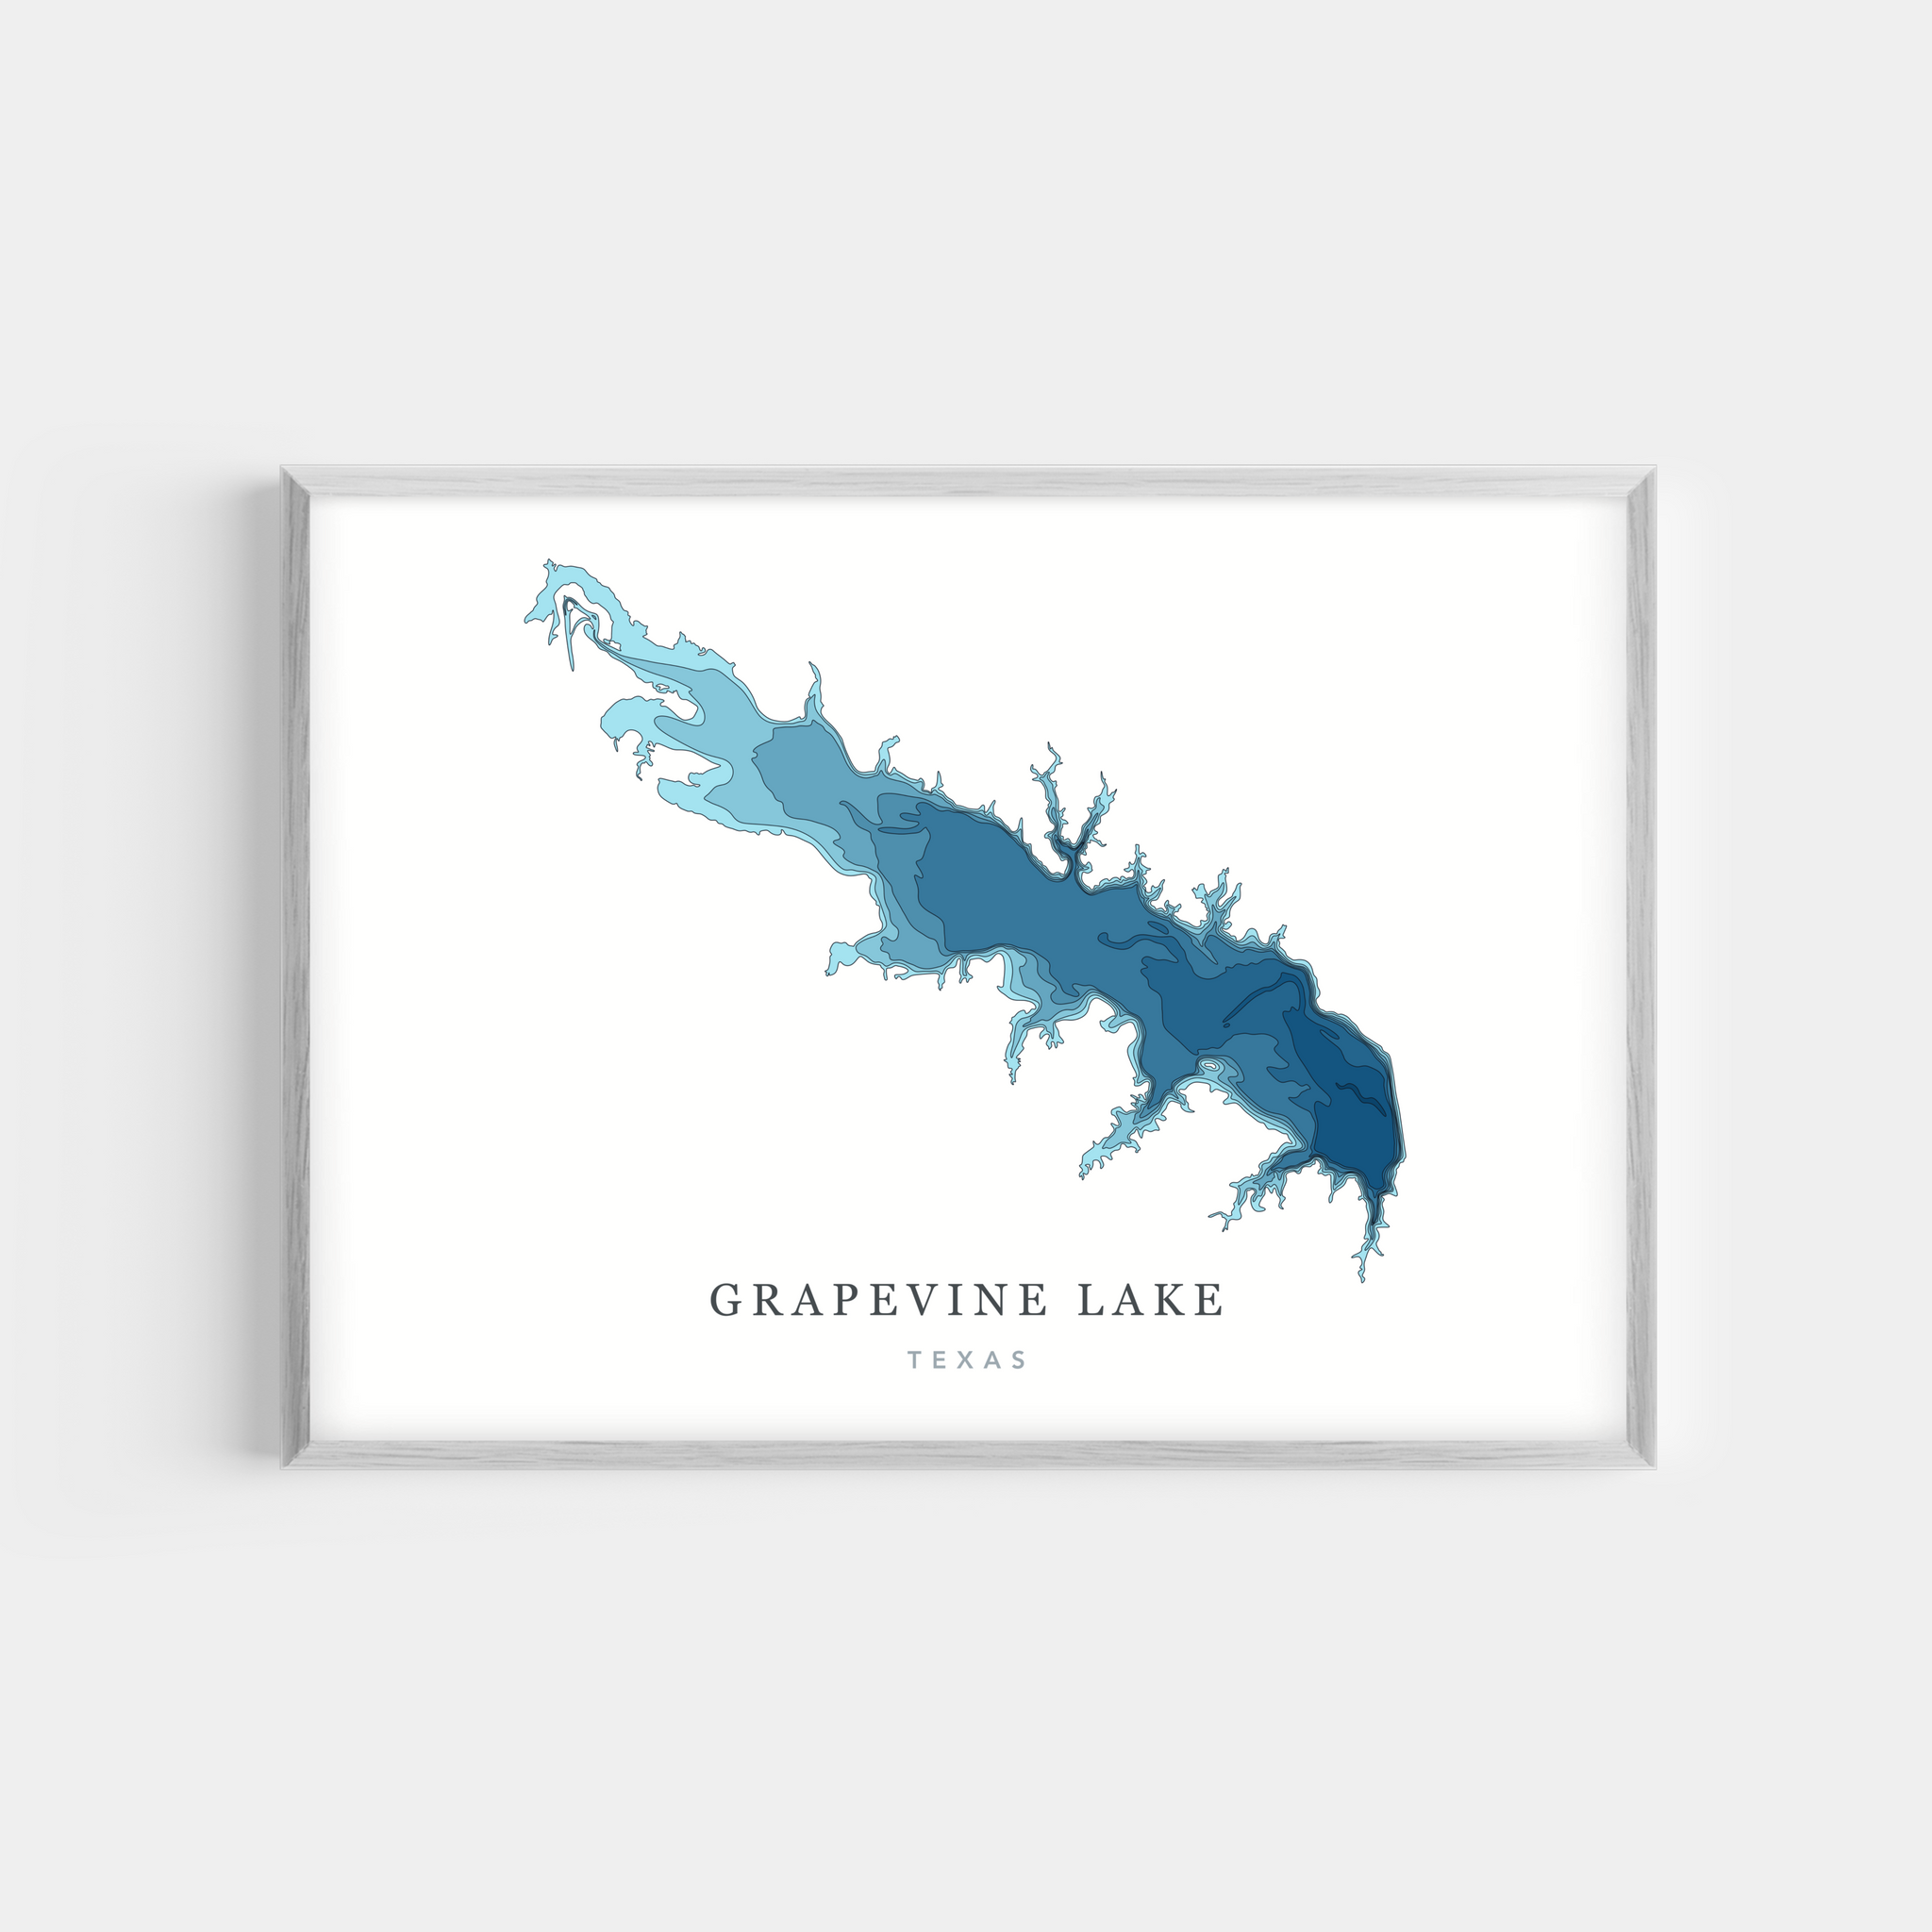 Grapevine Lake, Texas | Photo Print